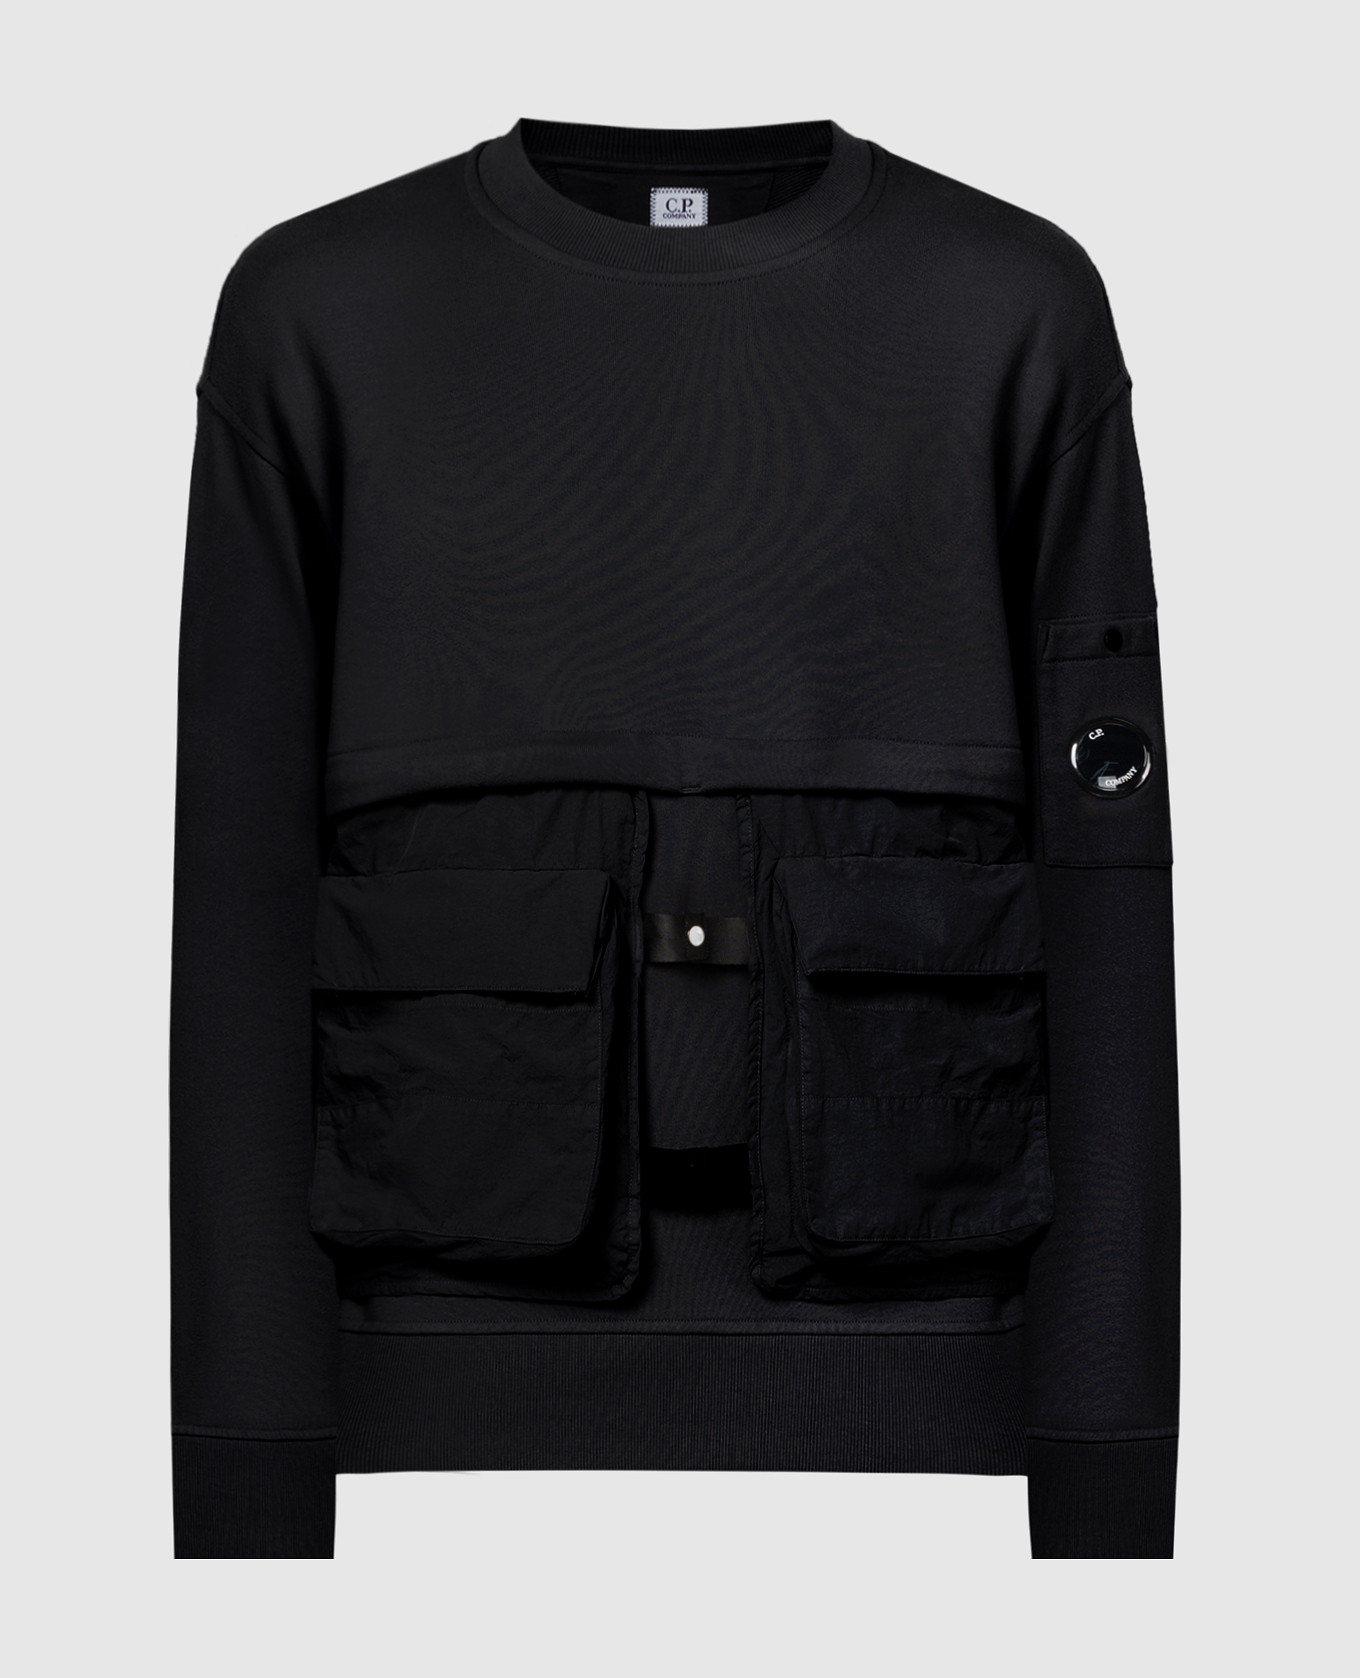 Black sweatshirt with double construction